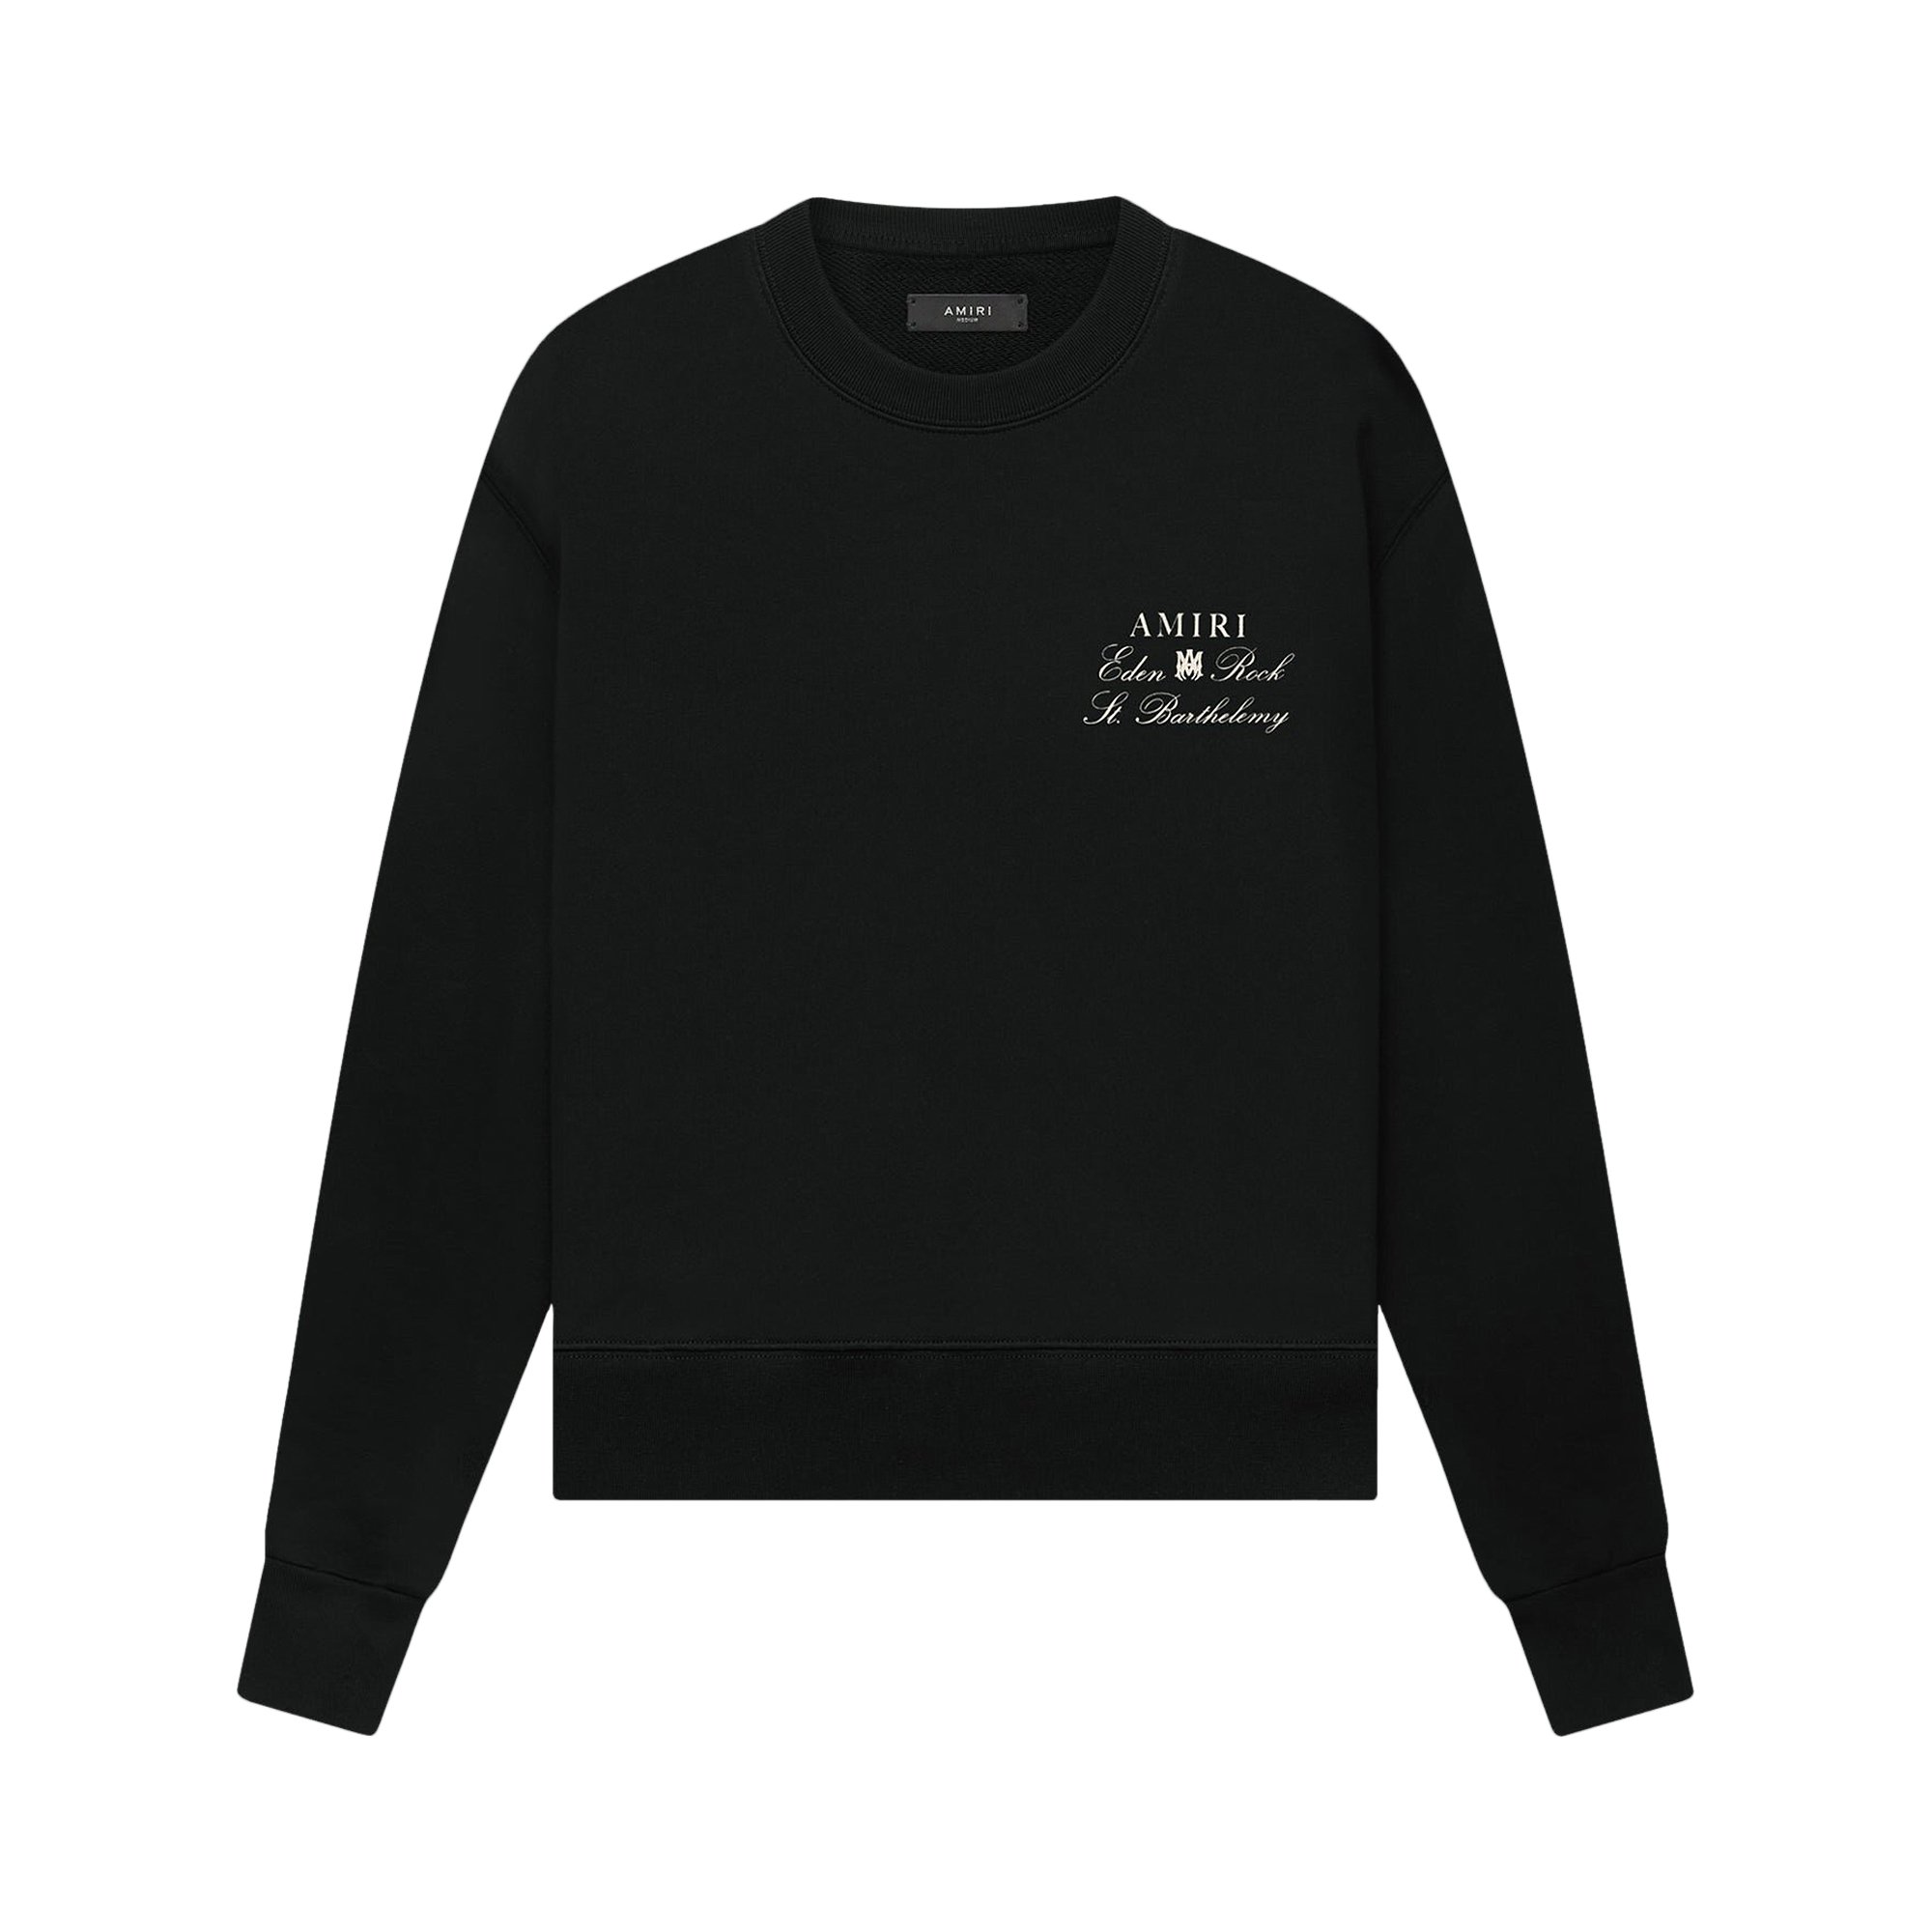 Amiri Eden Rock Crewneck Sweatshirt 'Black'